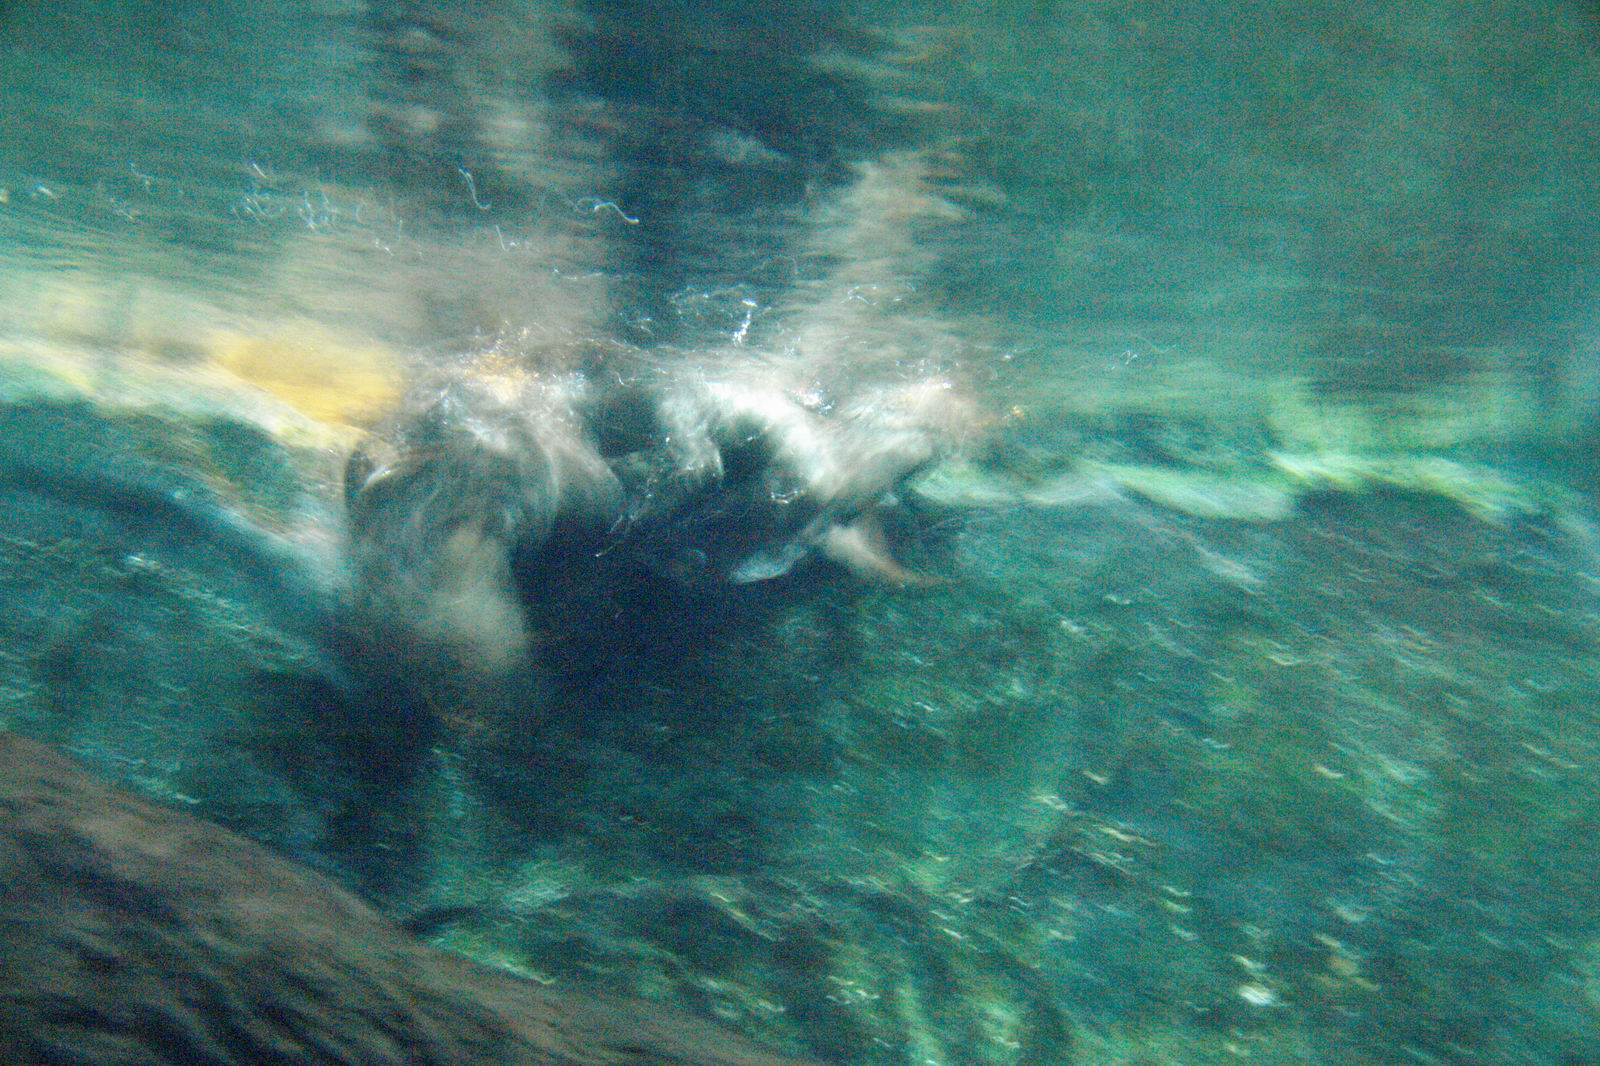 COEX Aquarium - Otters in the water having fun